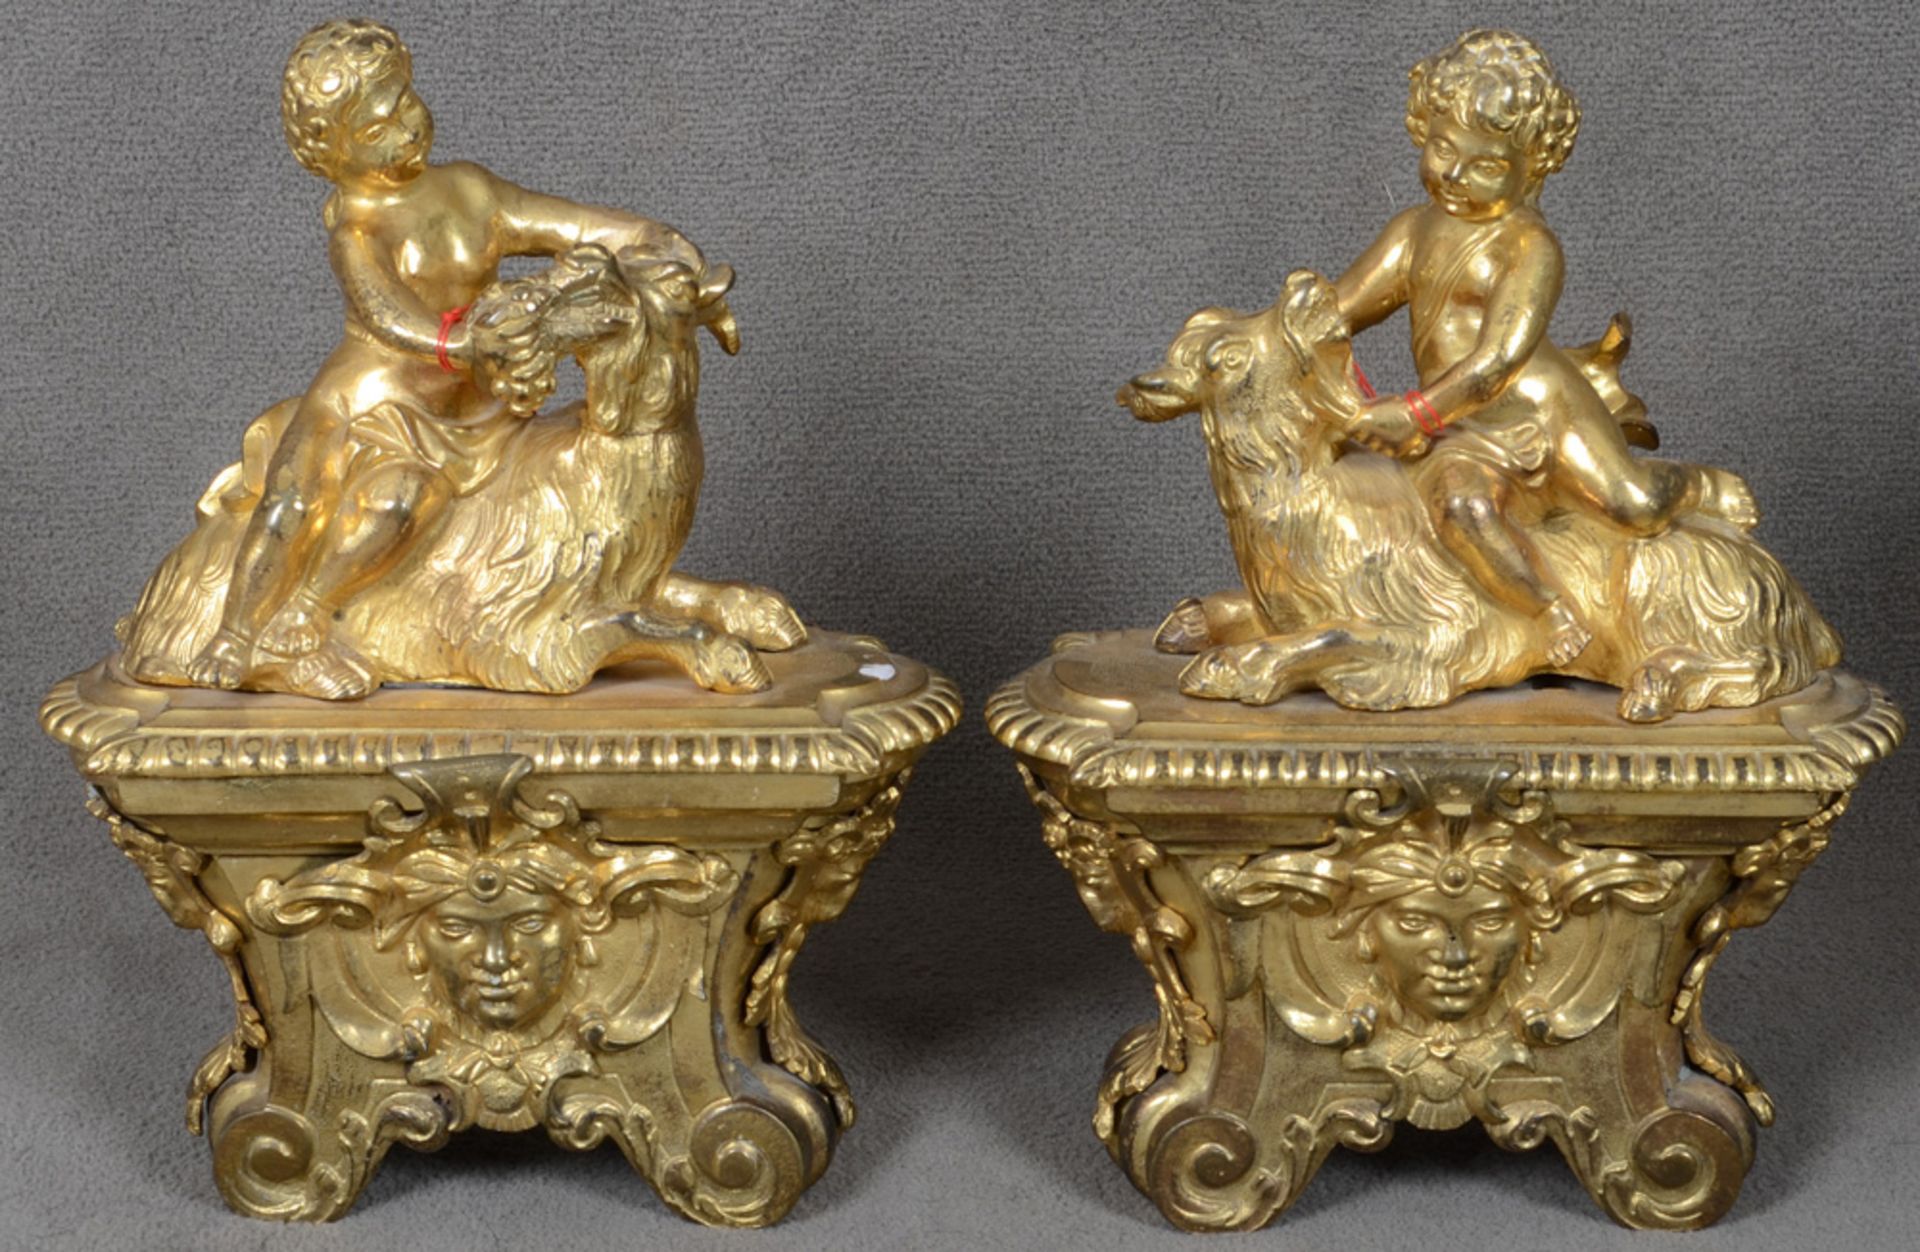 Paar Putten auf Ziegenbock. Paris 18. Jh. Bronze, feuervergoldet. Je auf ovalem, erhöhtem Sockel mit